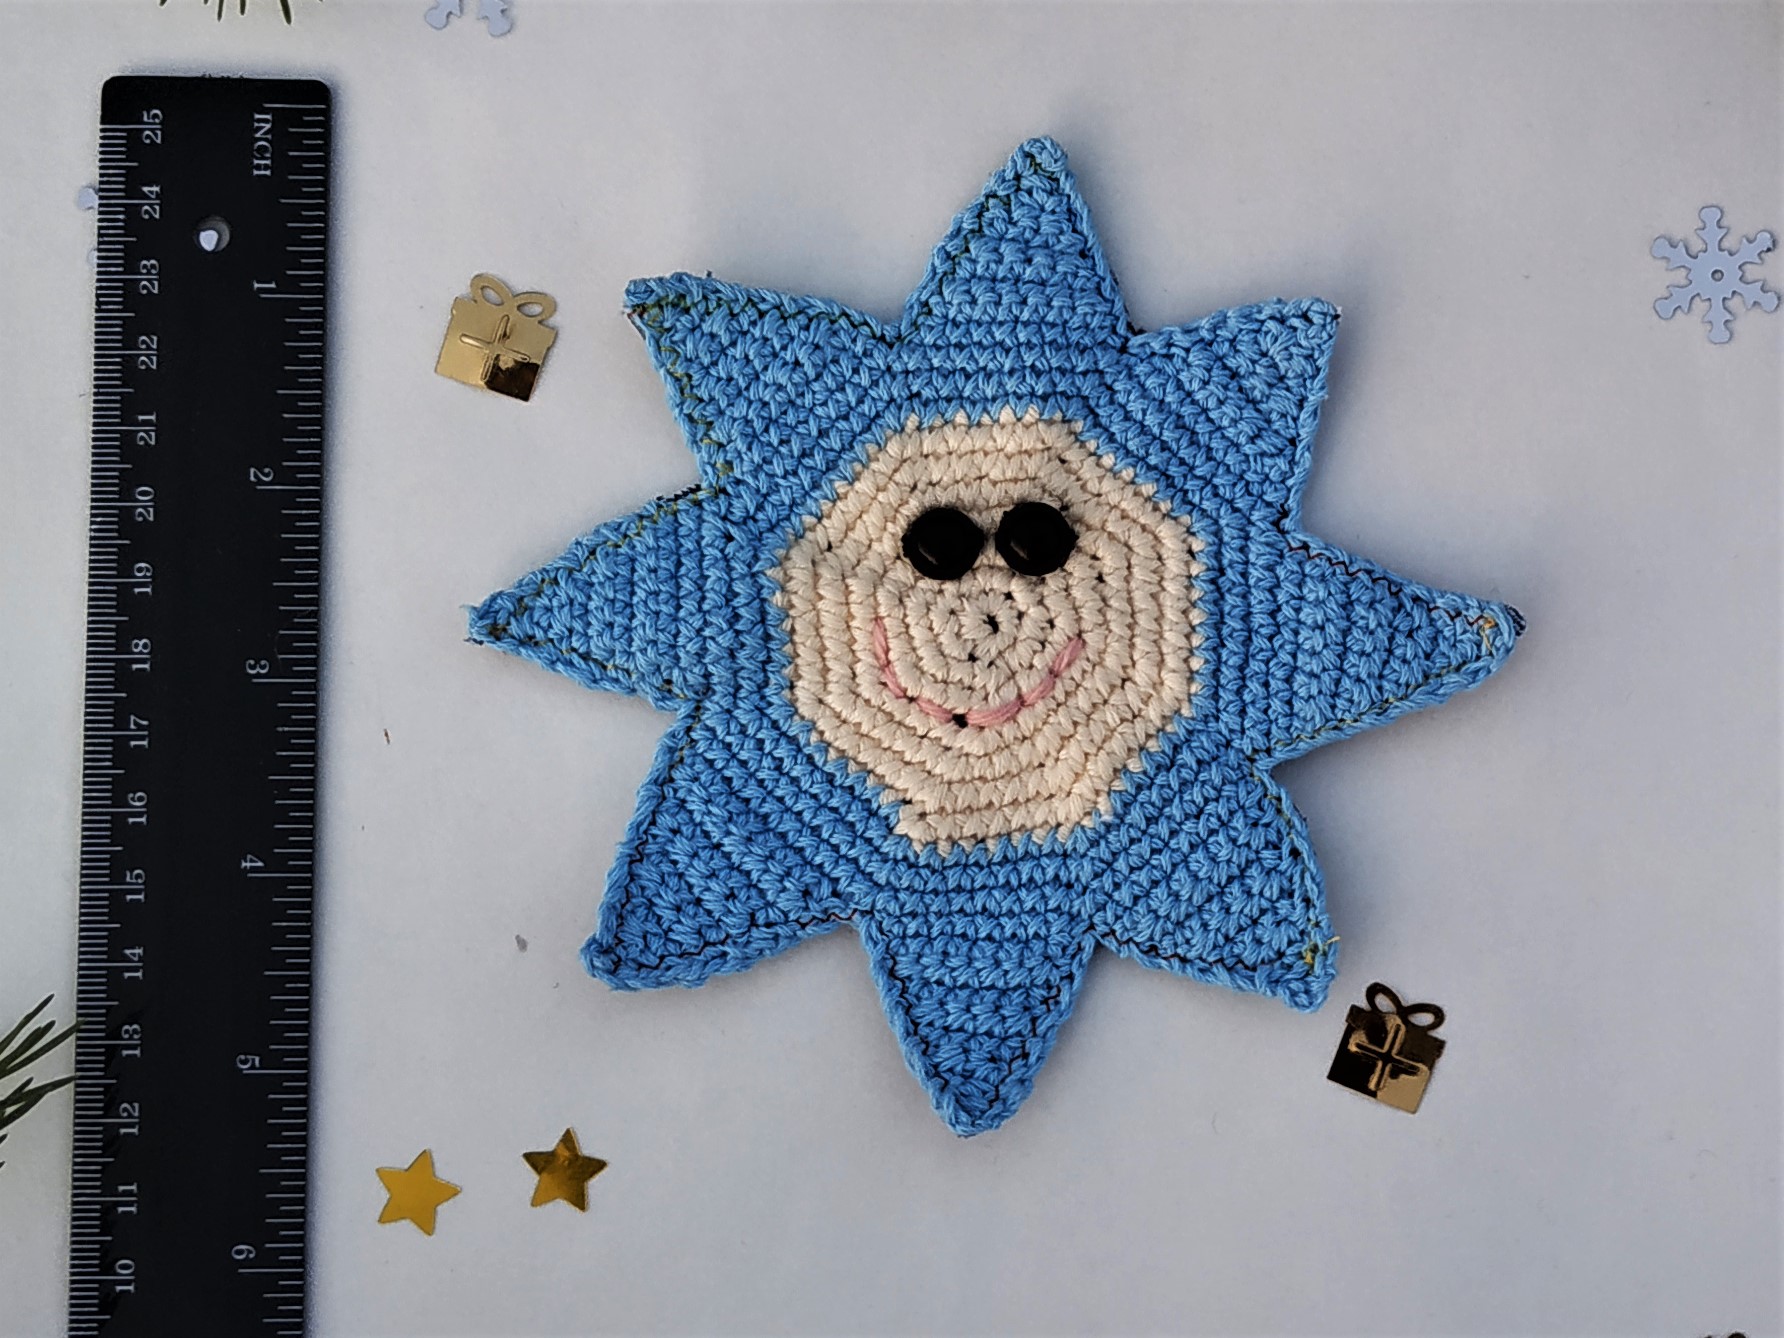 Bethlehem star crochet pattern, Crochet star pattern, Christmas crochet pattern